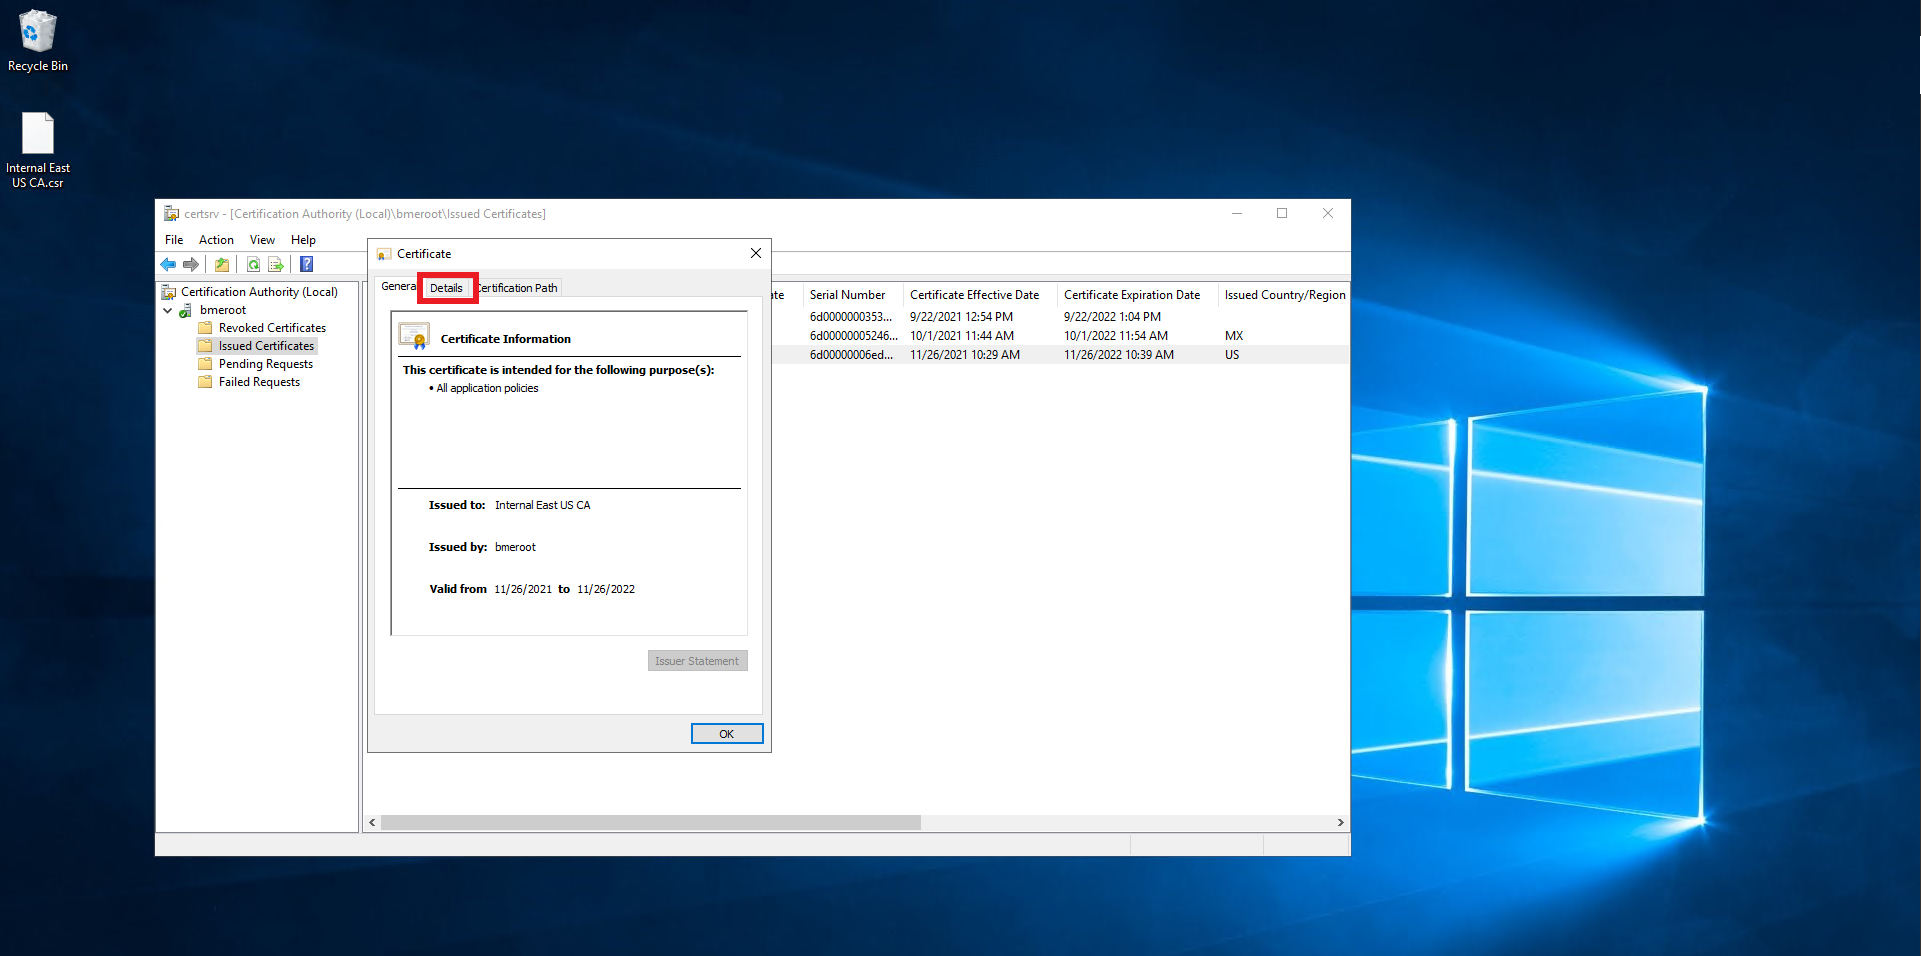 View Certificate Details in Windows